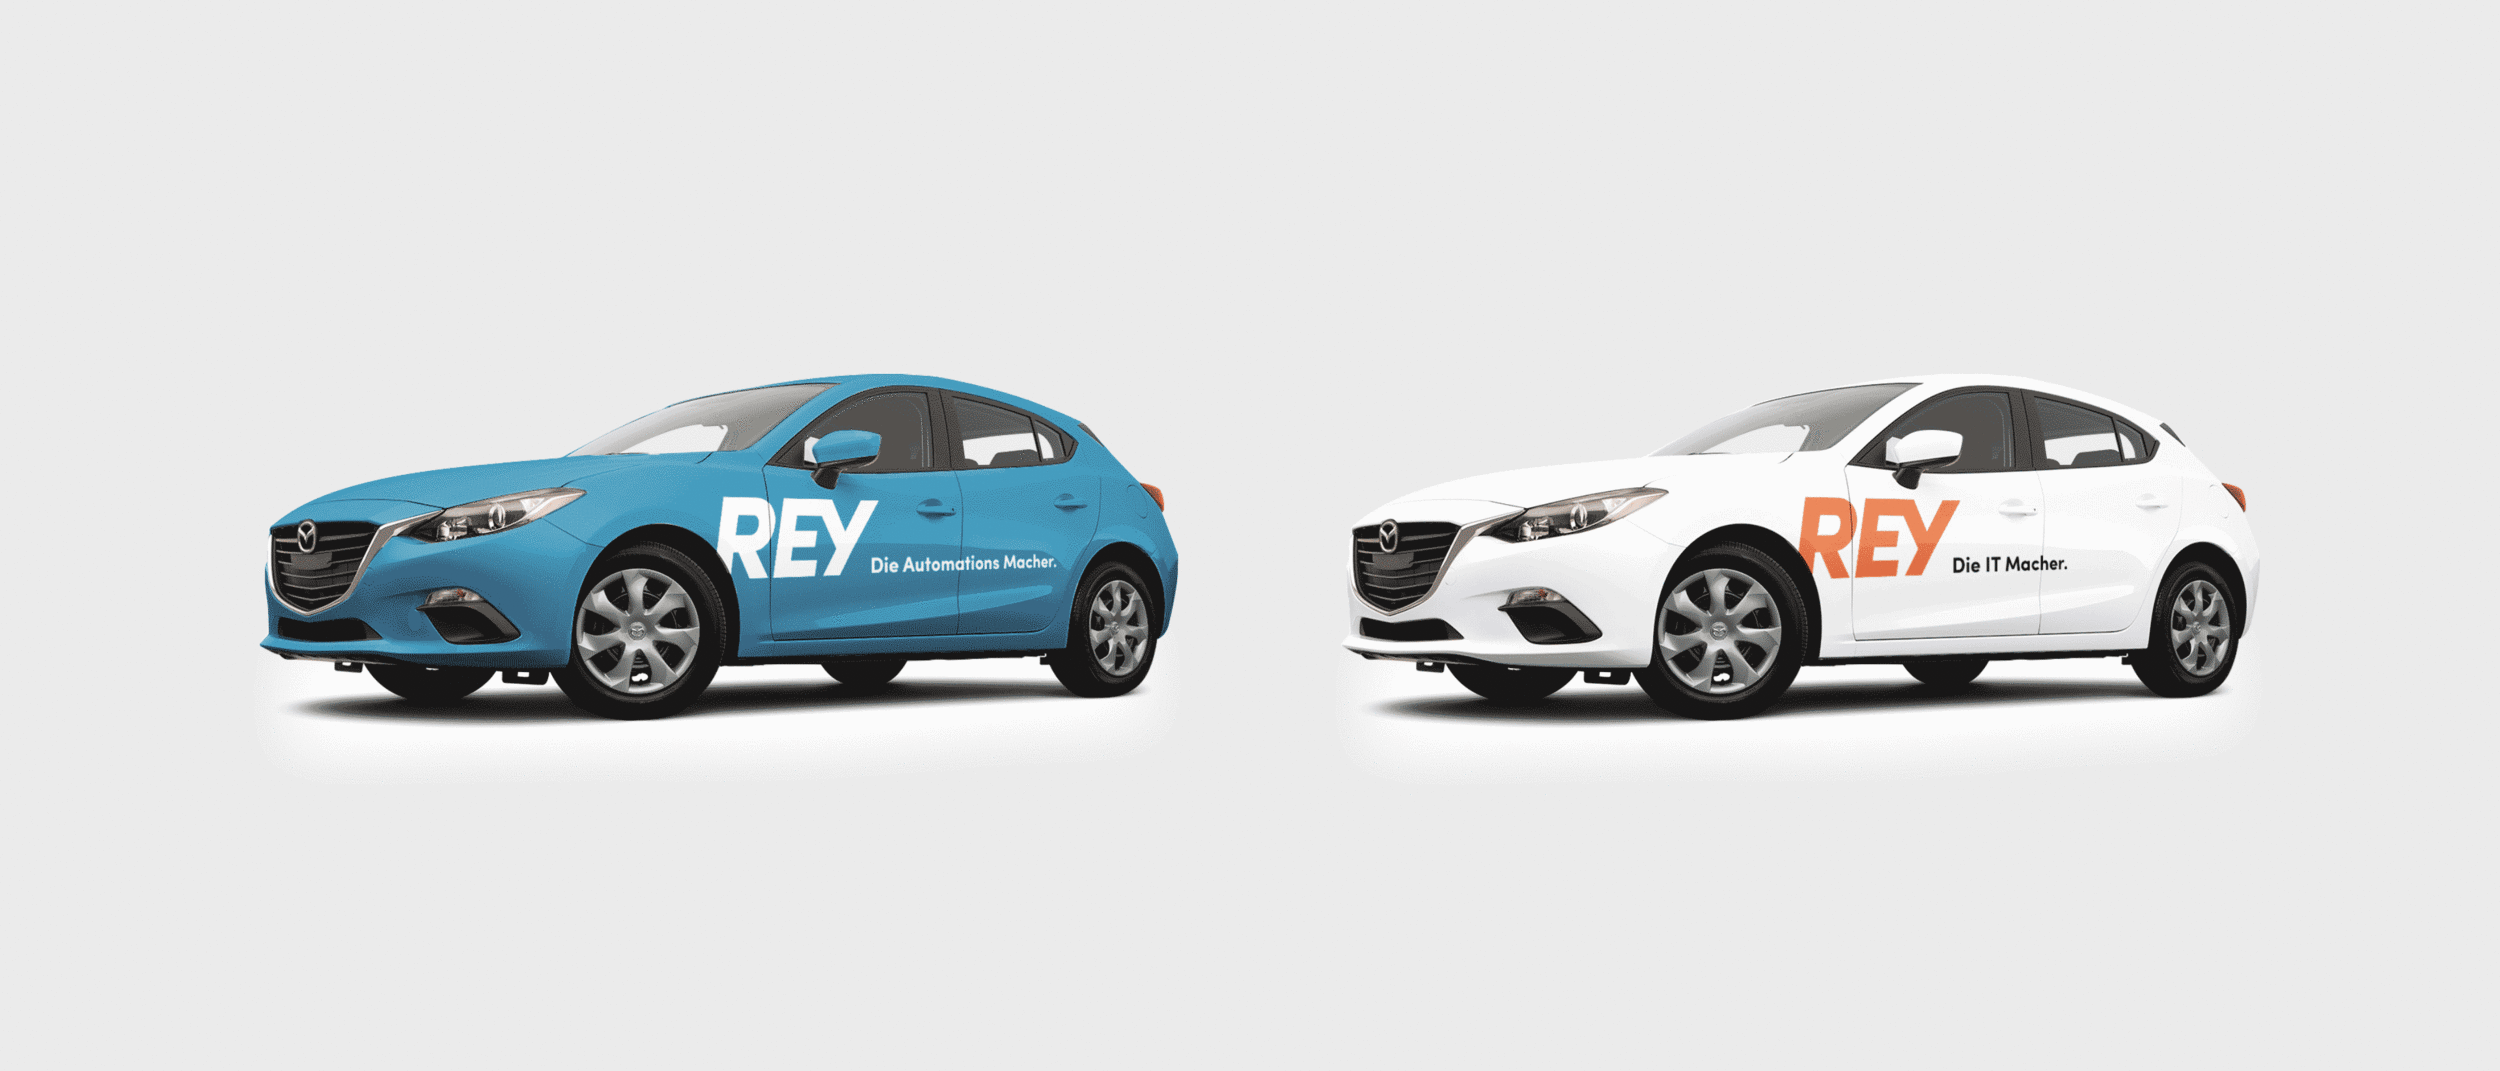 Rey - Design Car Animation